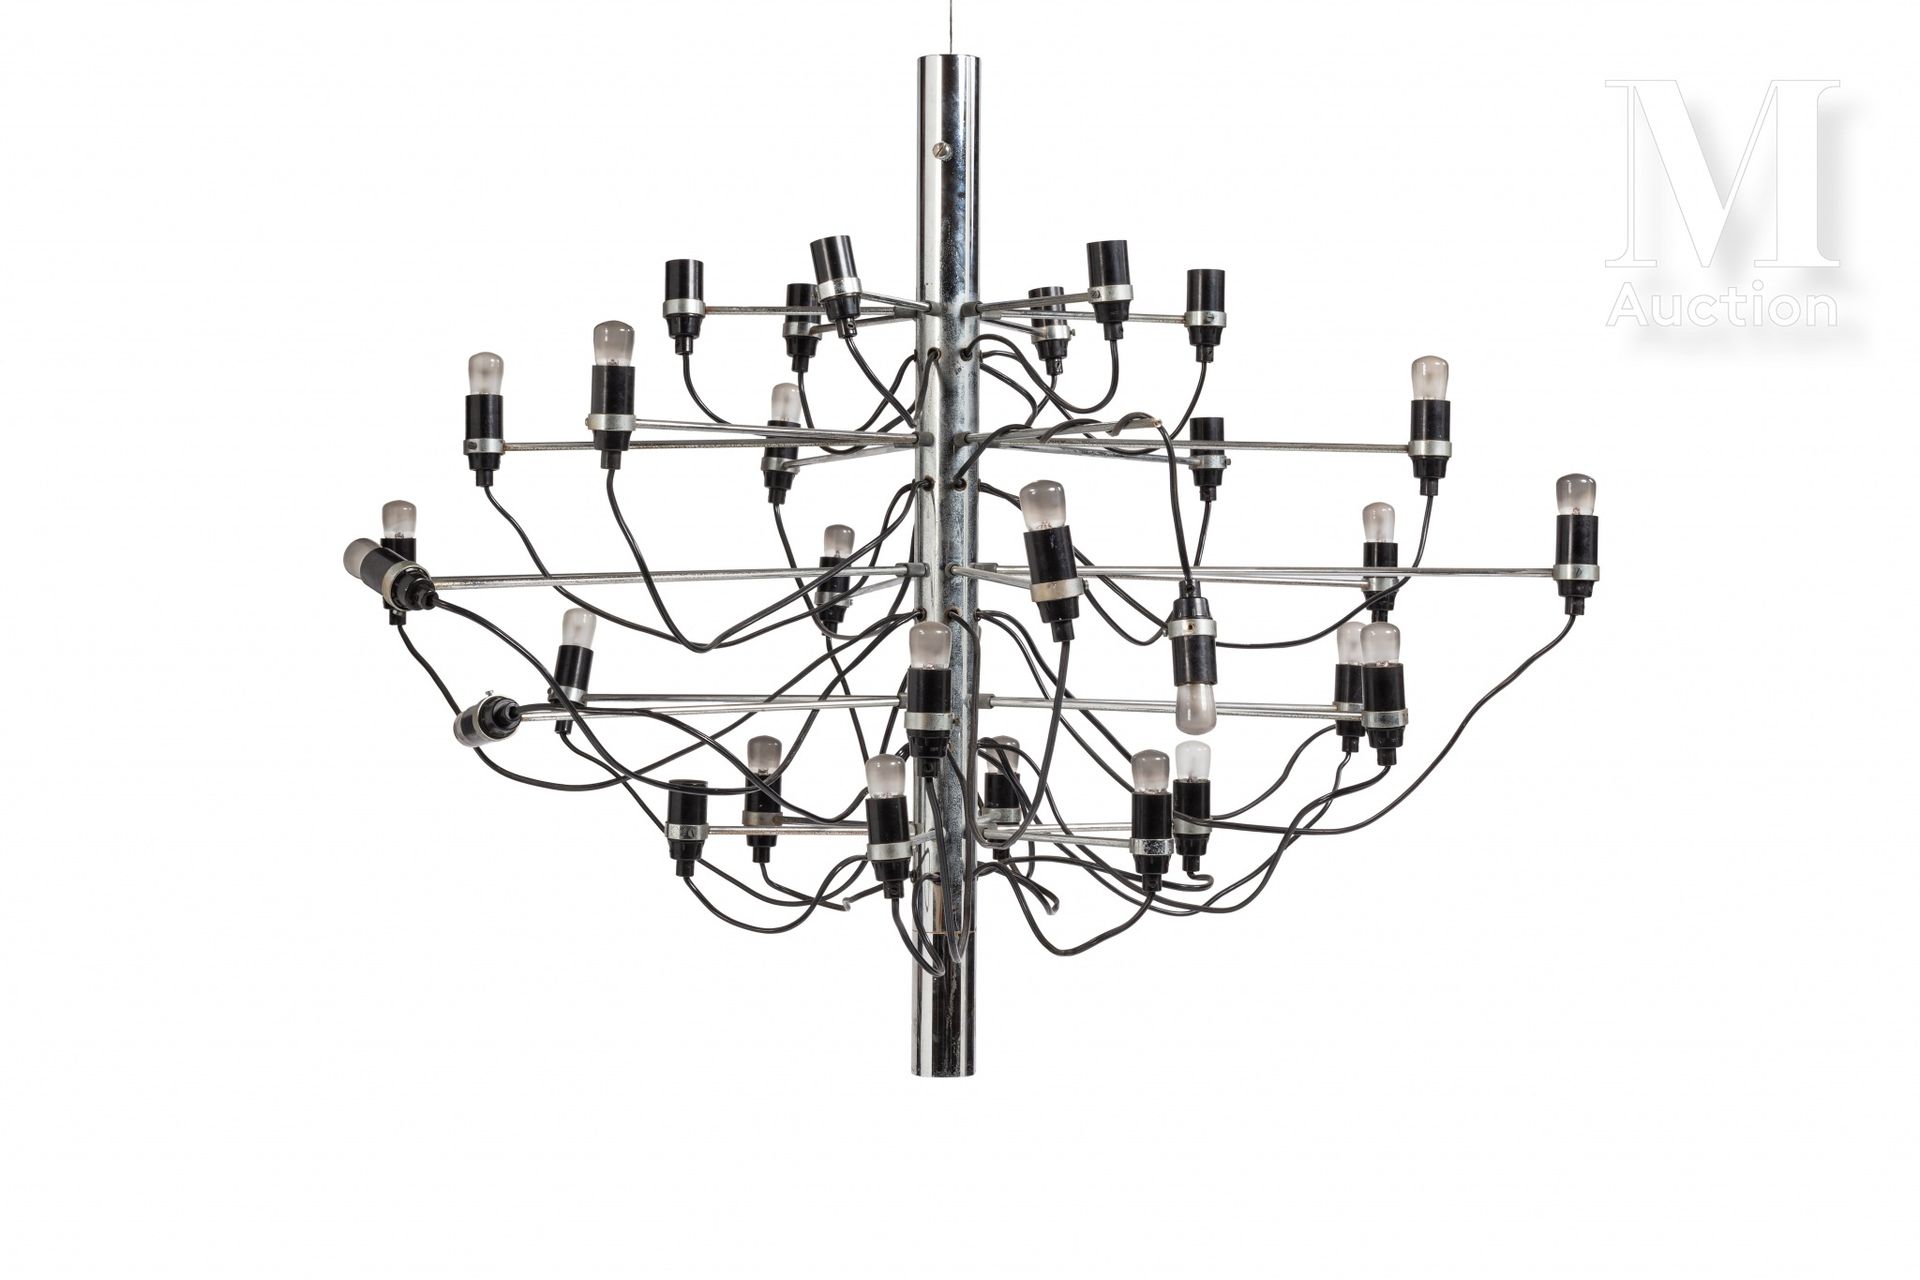 GINO SARFATTI (1912 - 1985) "2097/30"

弗洛斯版

创建于1958年。

由两盏吊灯组成的套房，每盏灯可容纳30个灯泡。
&hellip;